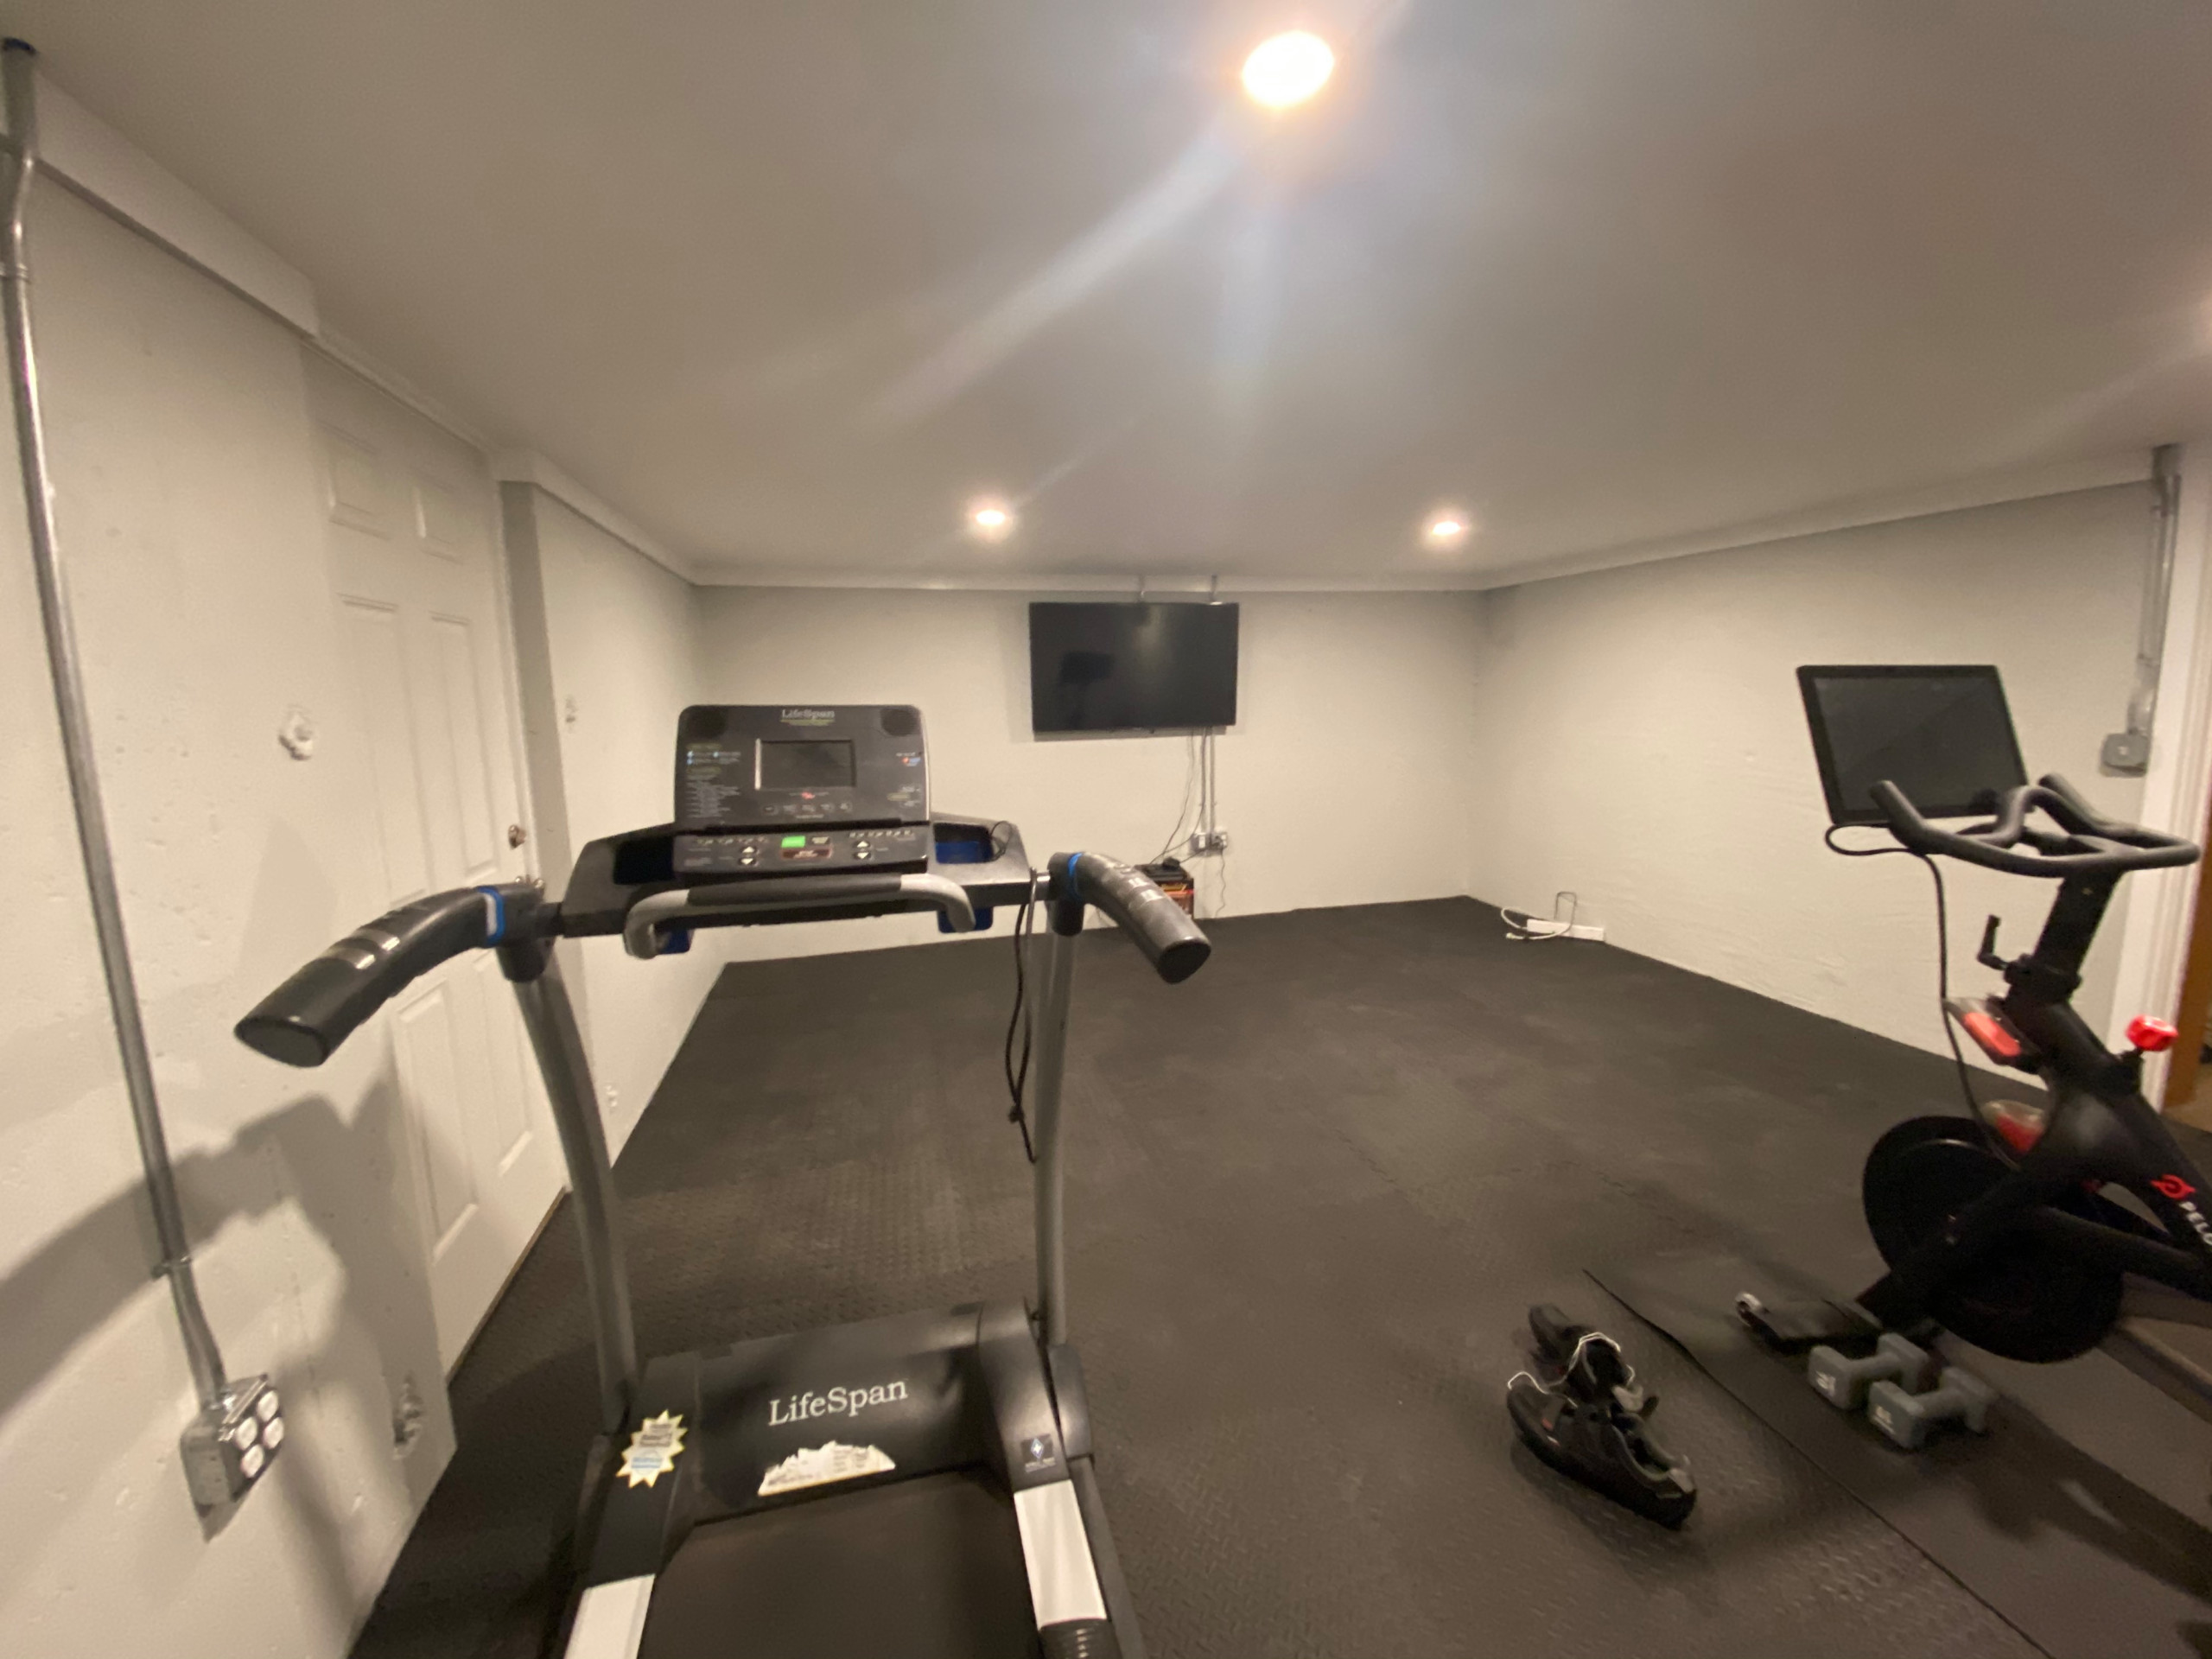 Fitness / Exercise Room Design